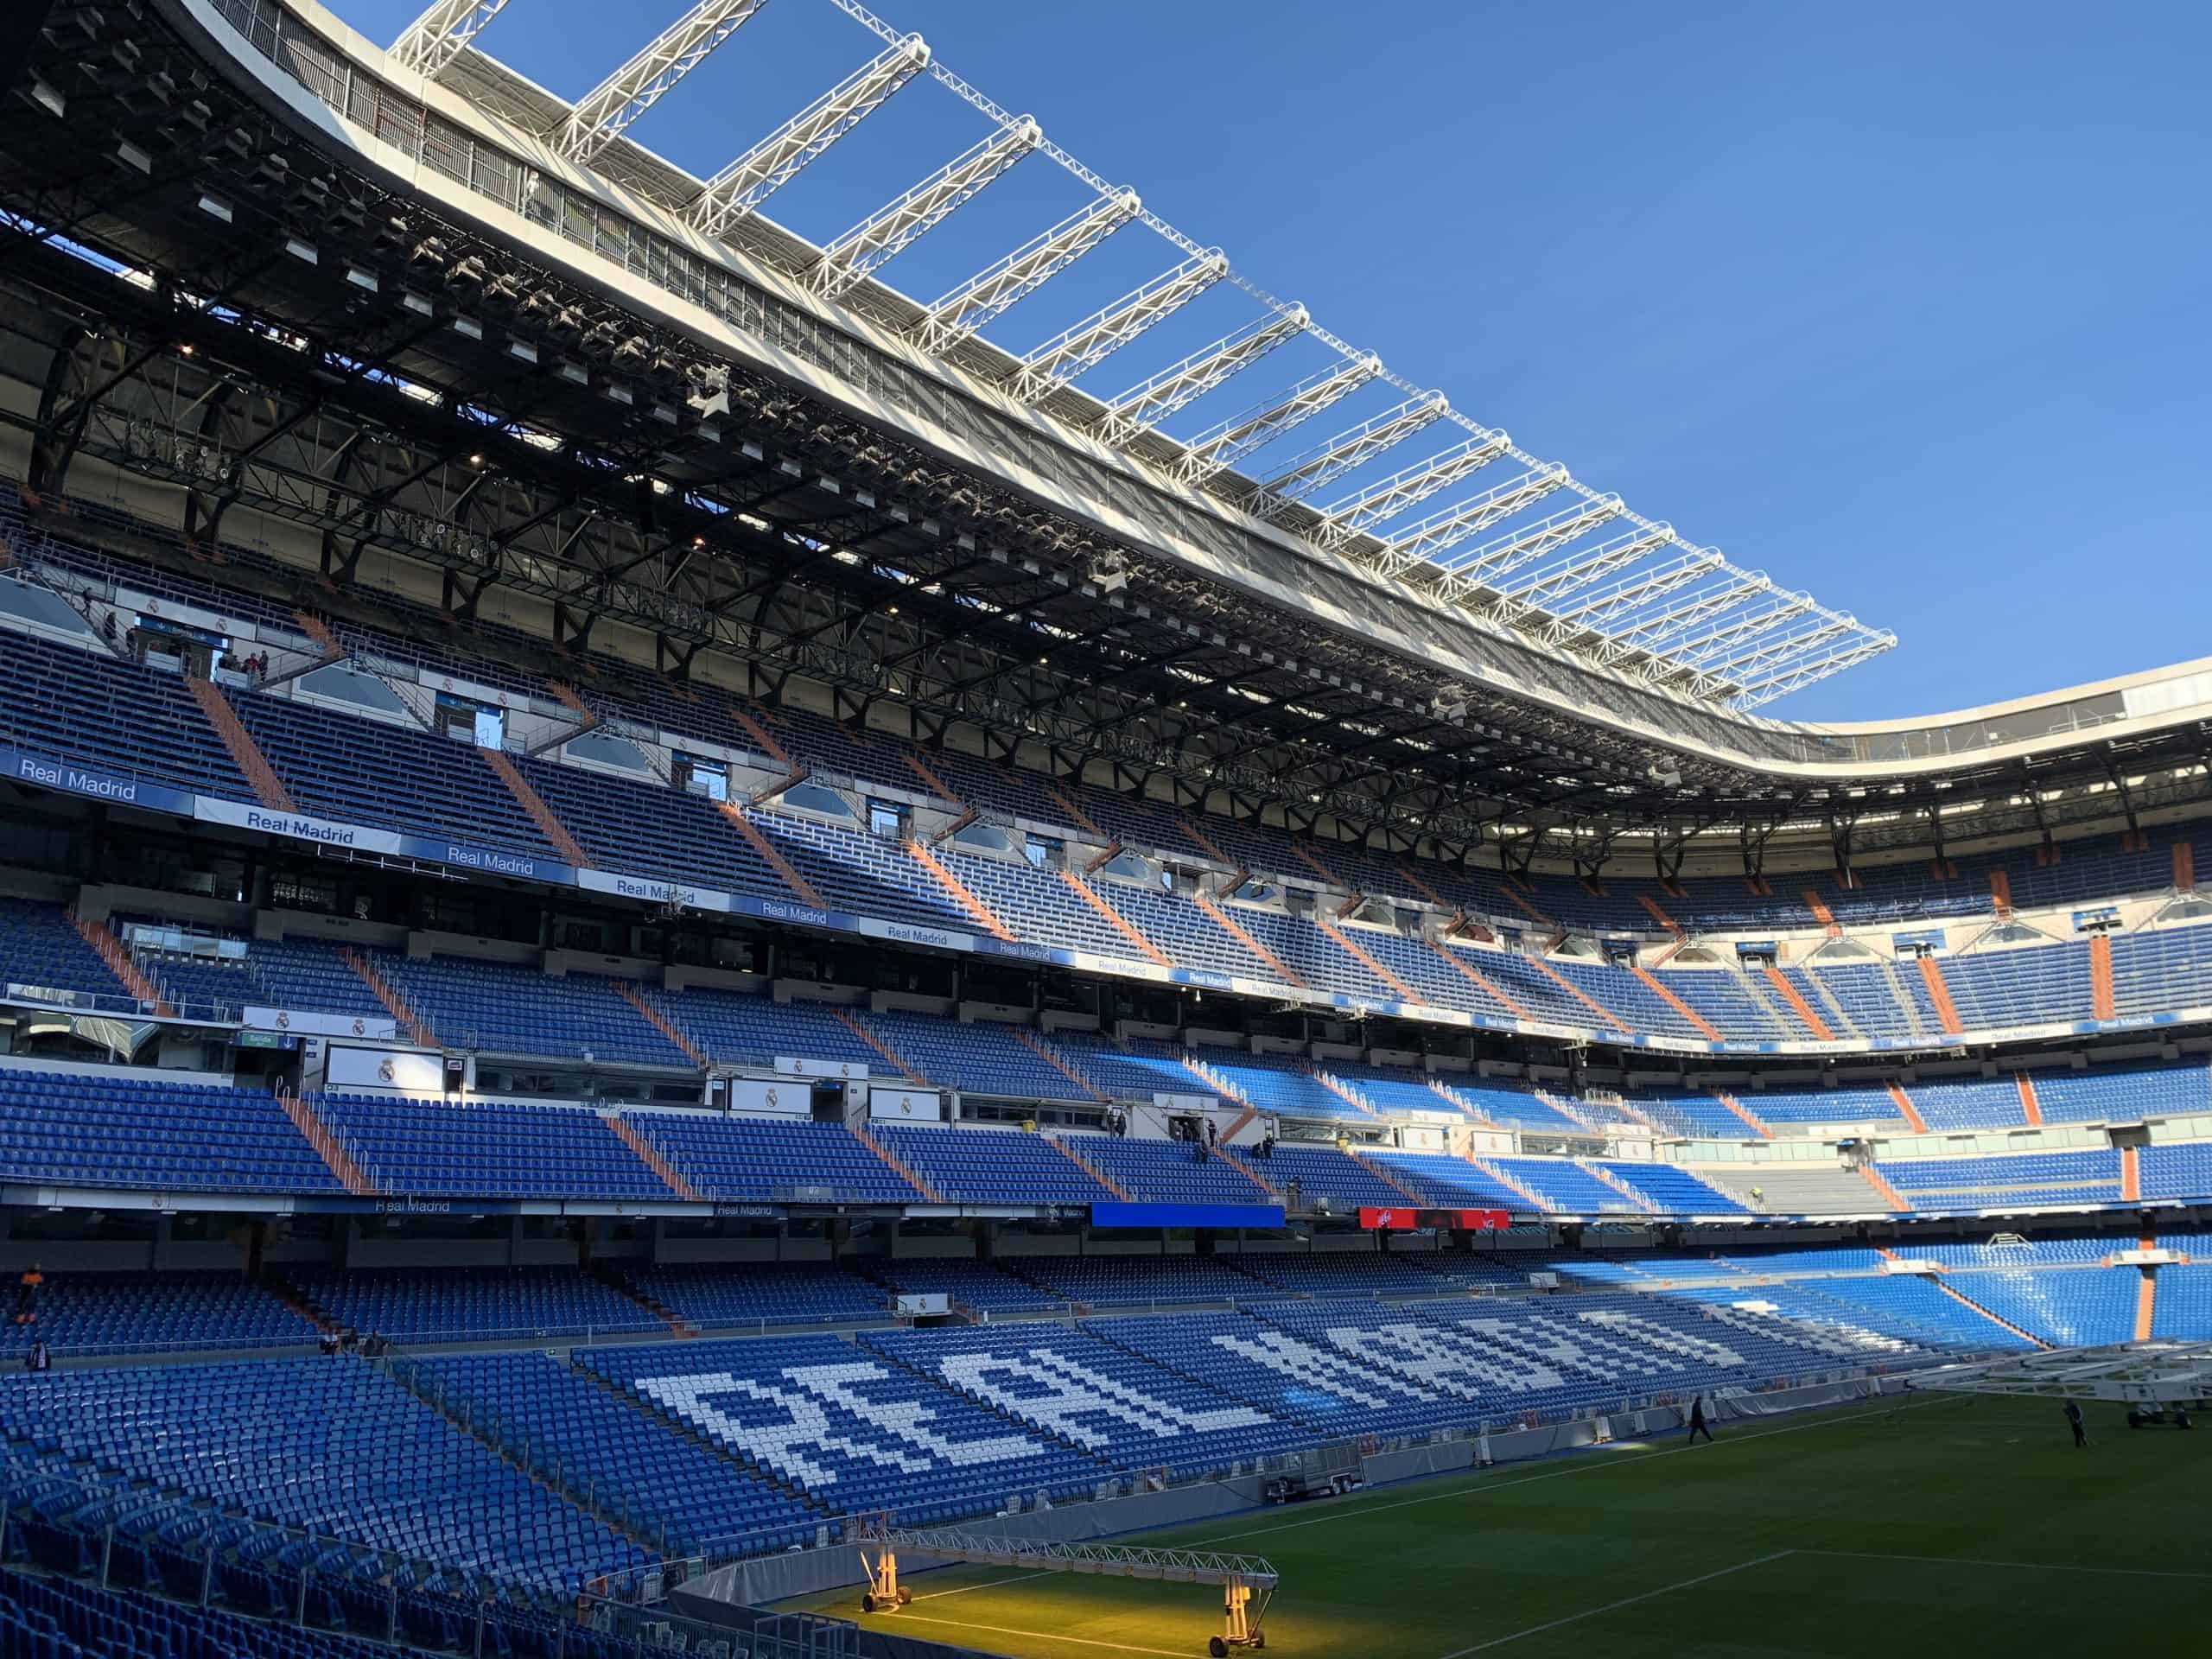 Estadio Santiago Bernabeu – Real Madrid